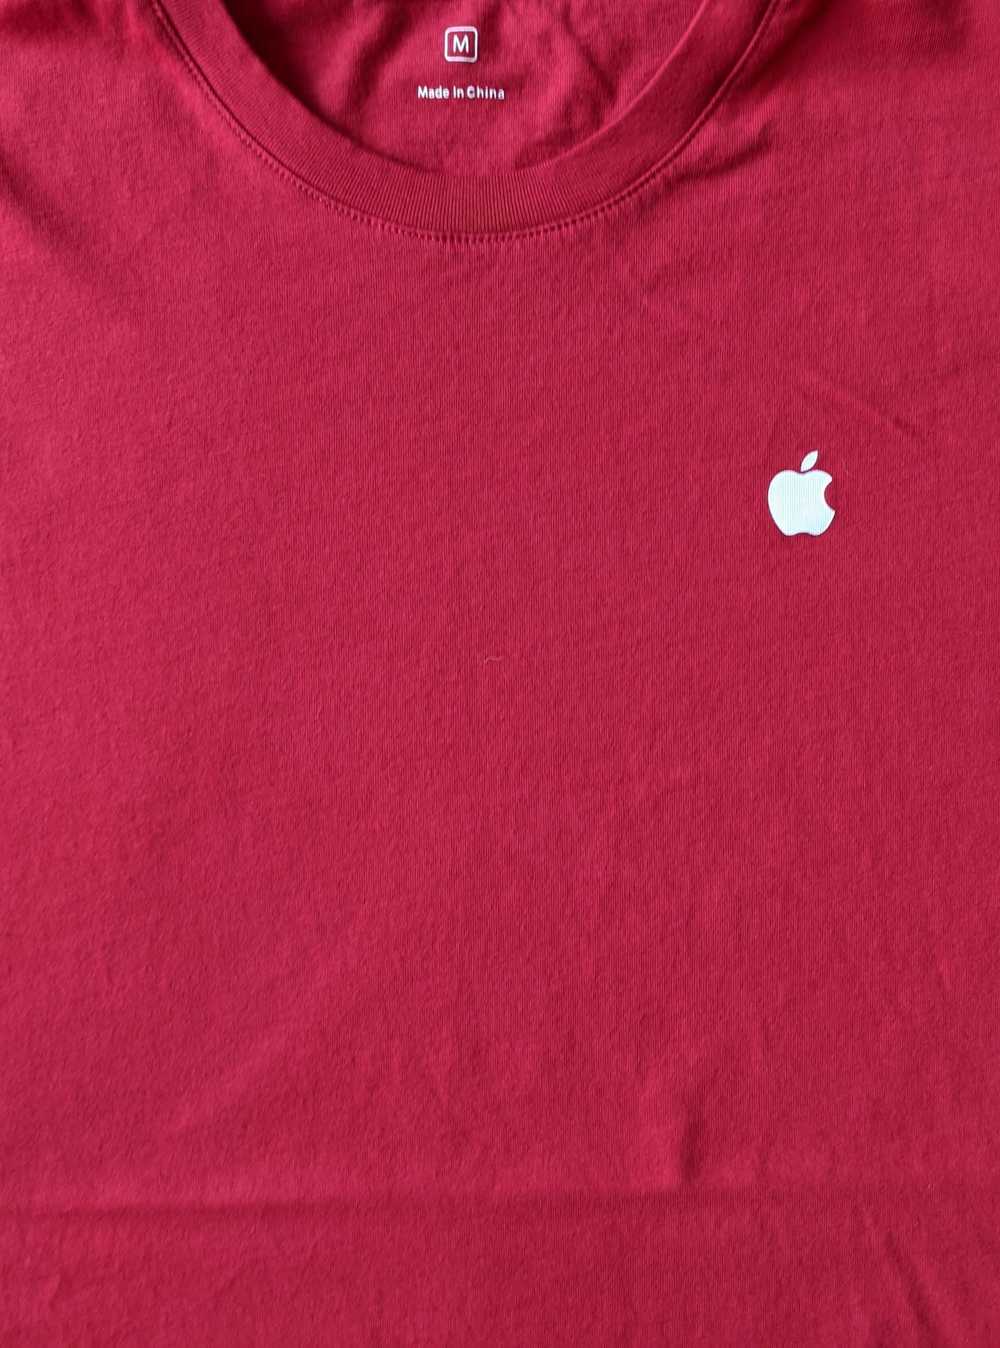 Apple Apple red work t-shirt - image 2